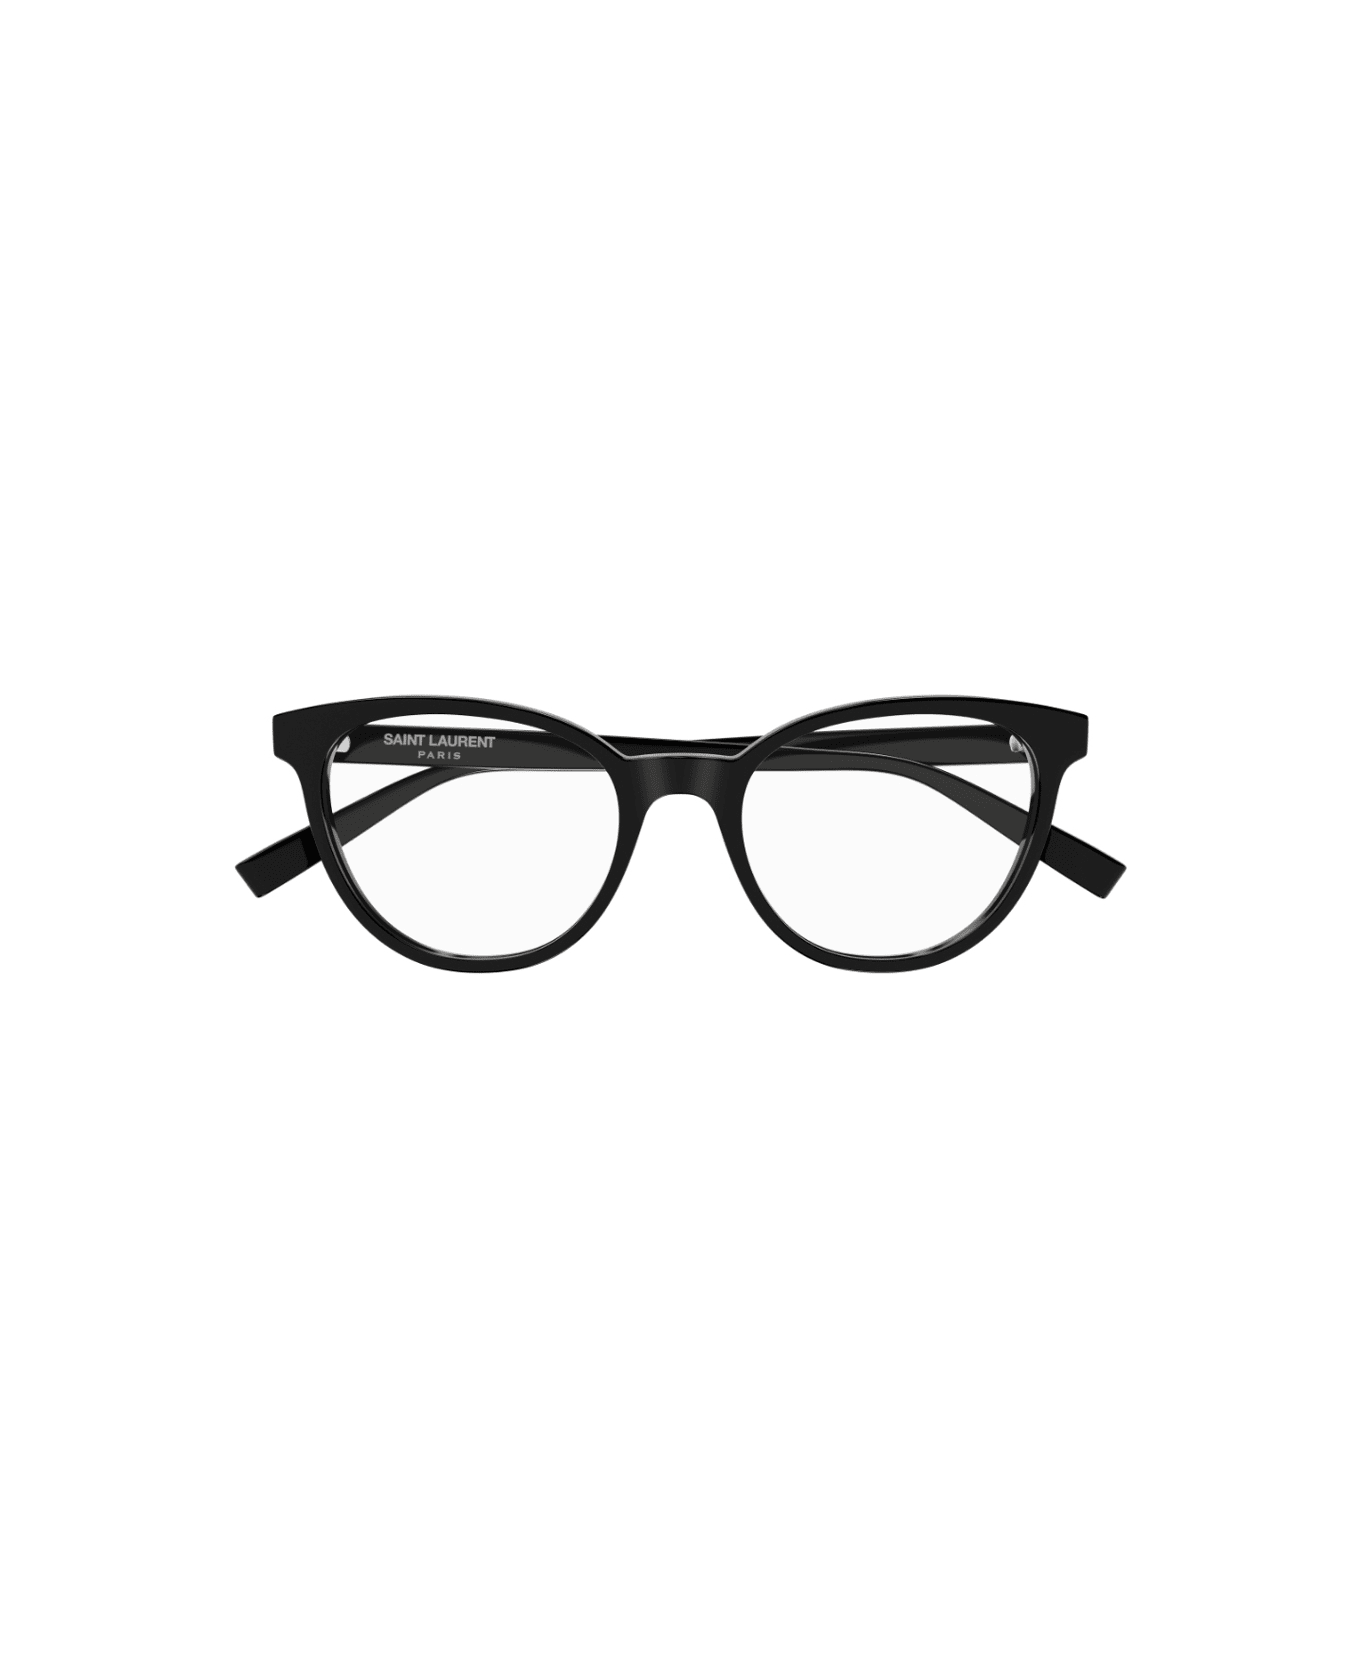 Saint Laurent Eyewear SL 589 001 Glasses